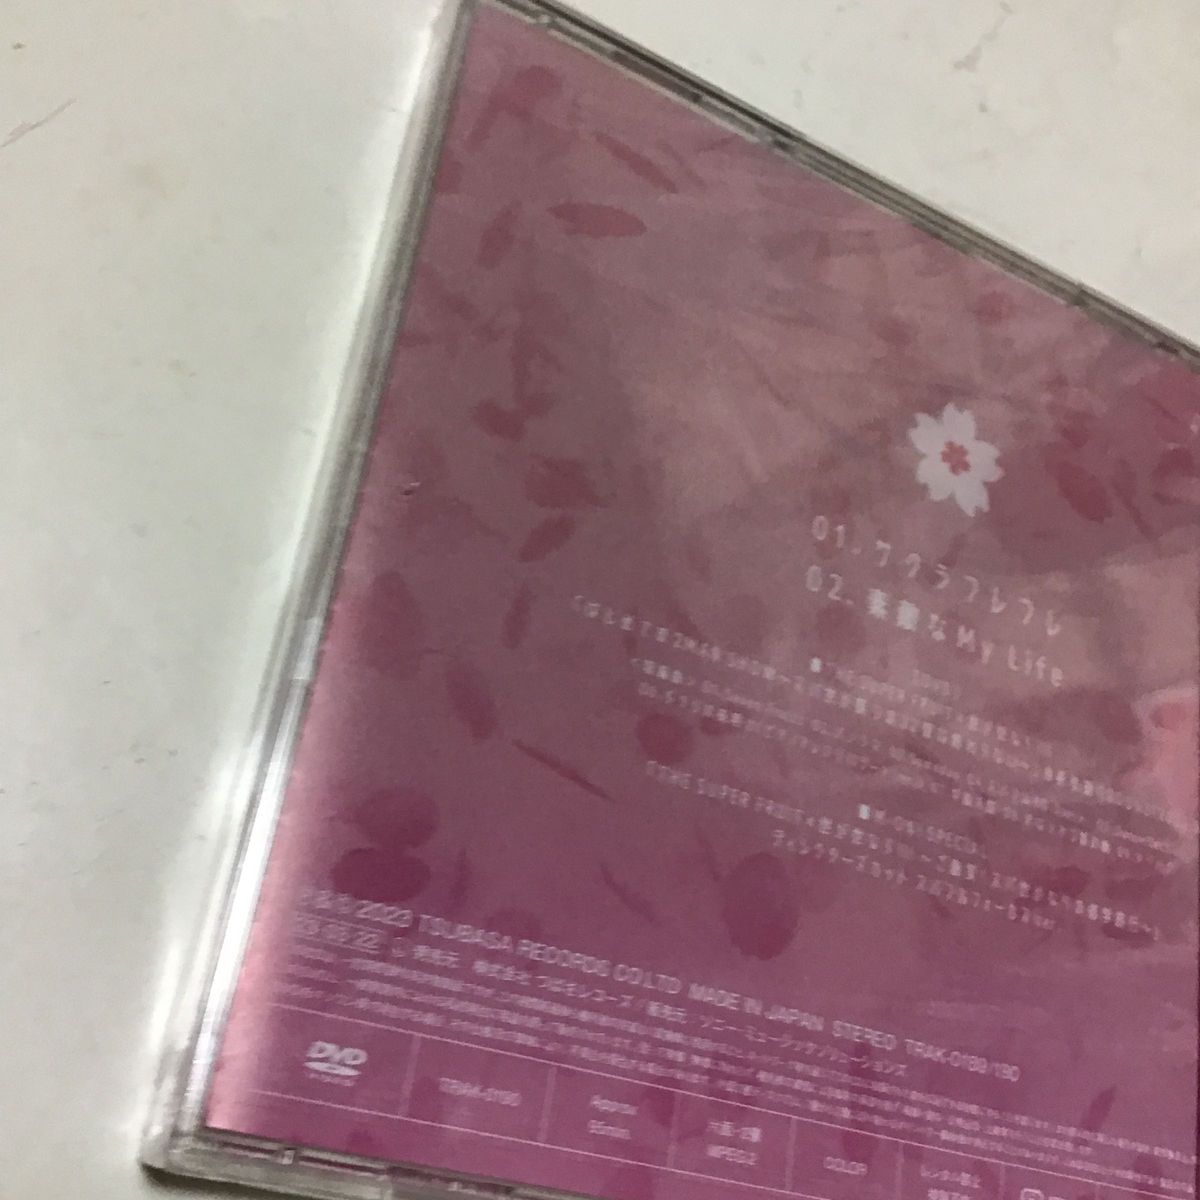 THE SUPER FRUIT/タイトル未定 [CD+DVD] [2枚組] [初回出荷限定盤 ((2023/3/22発売)